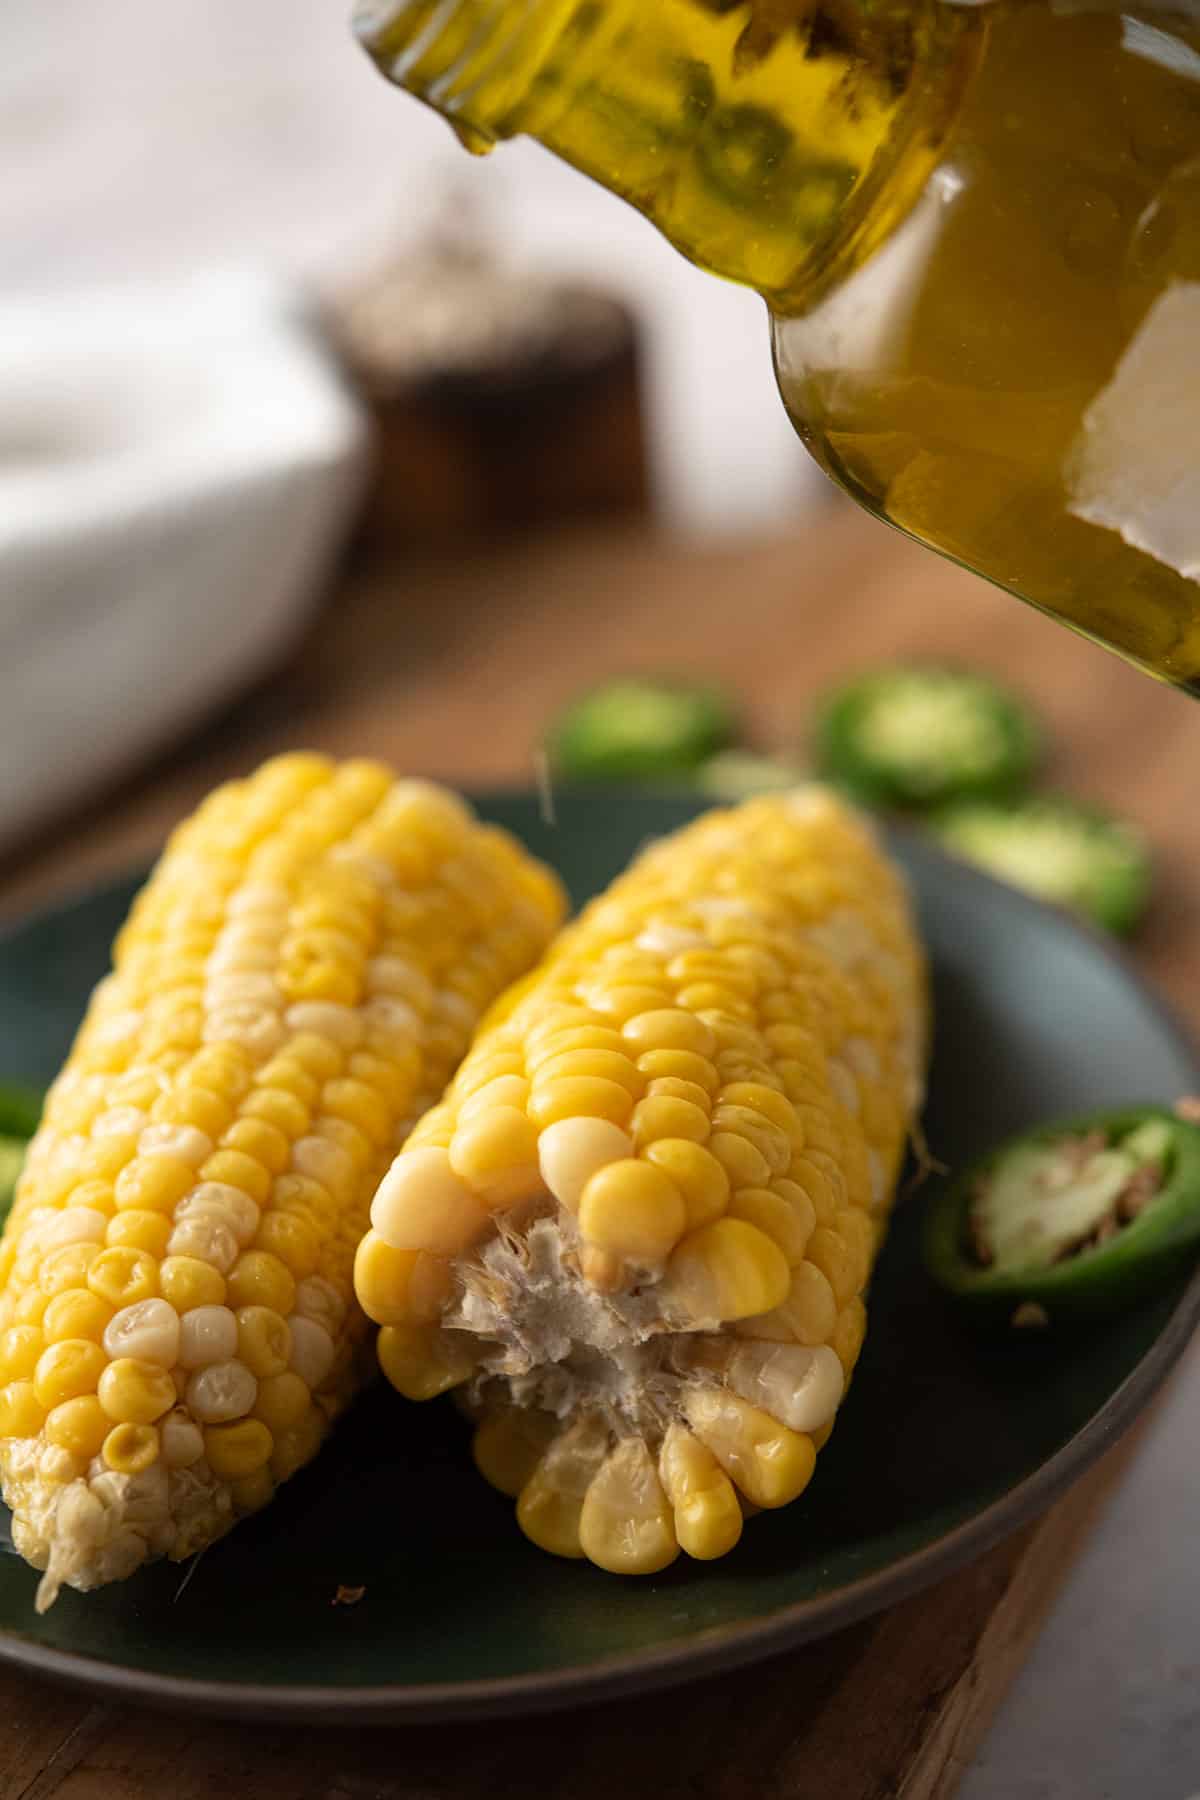 serving jalapeno infused olive oil over corn